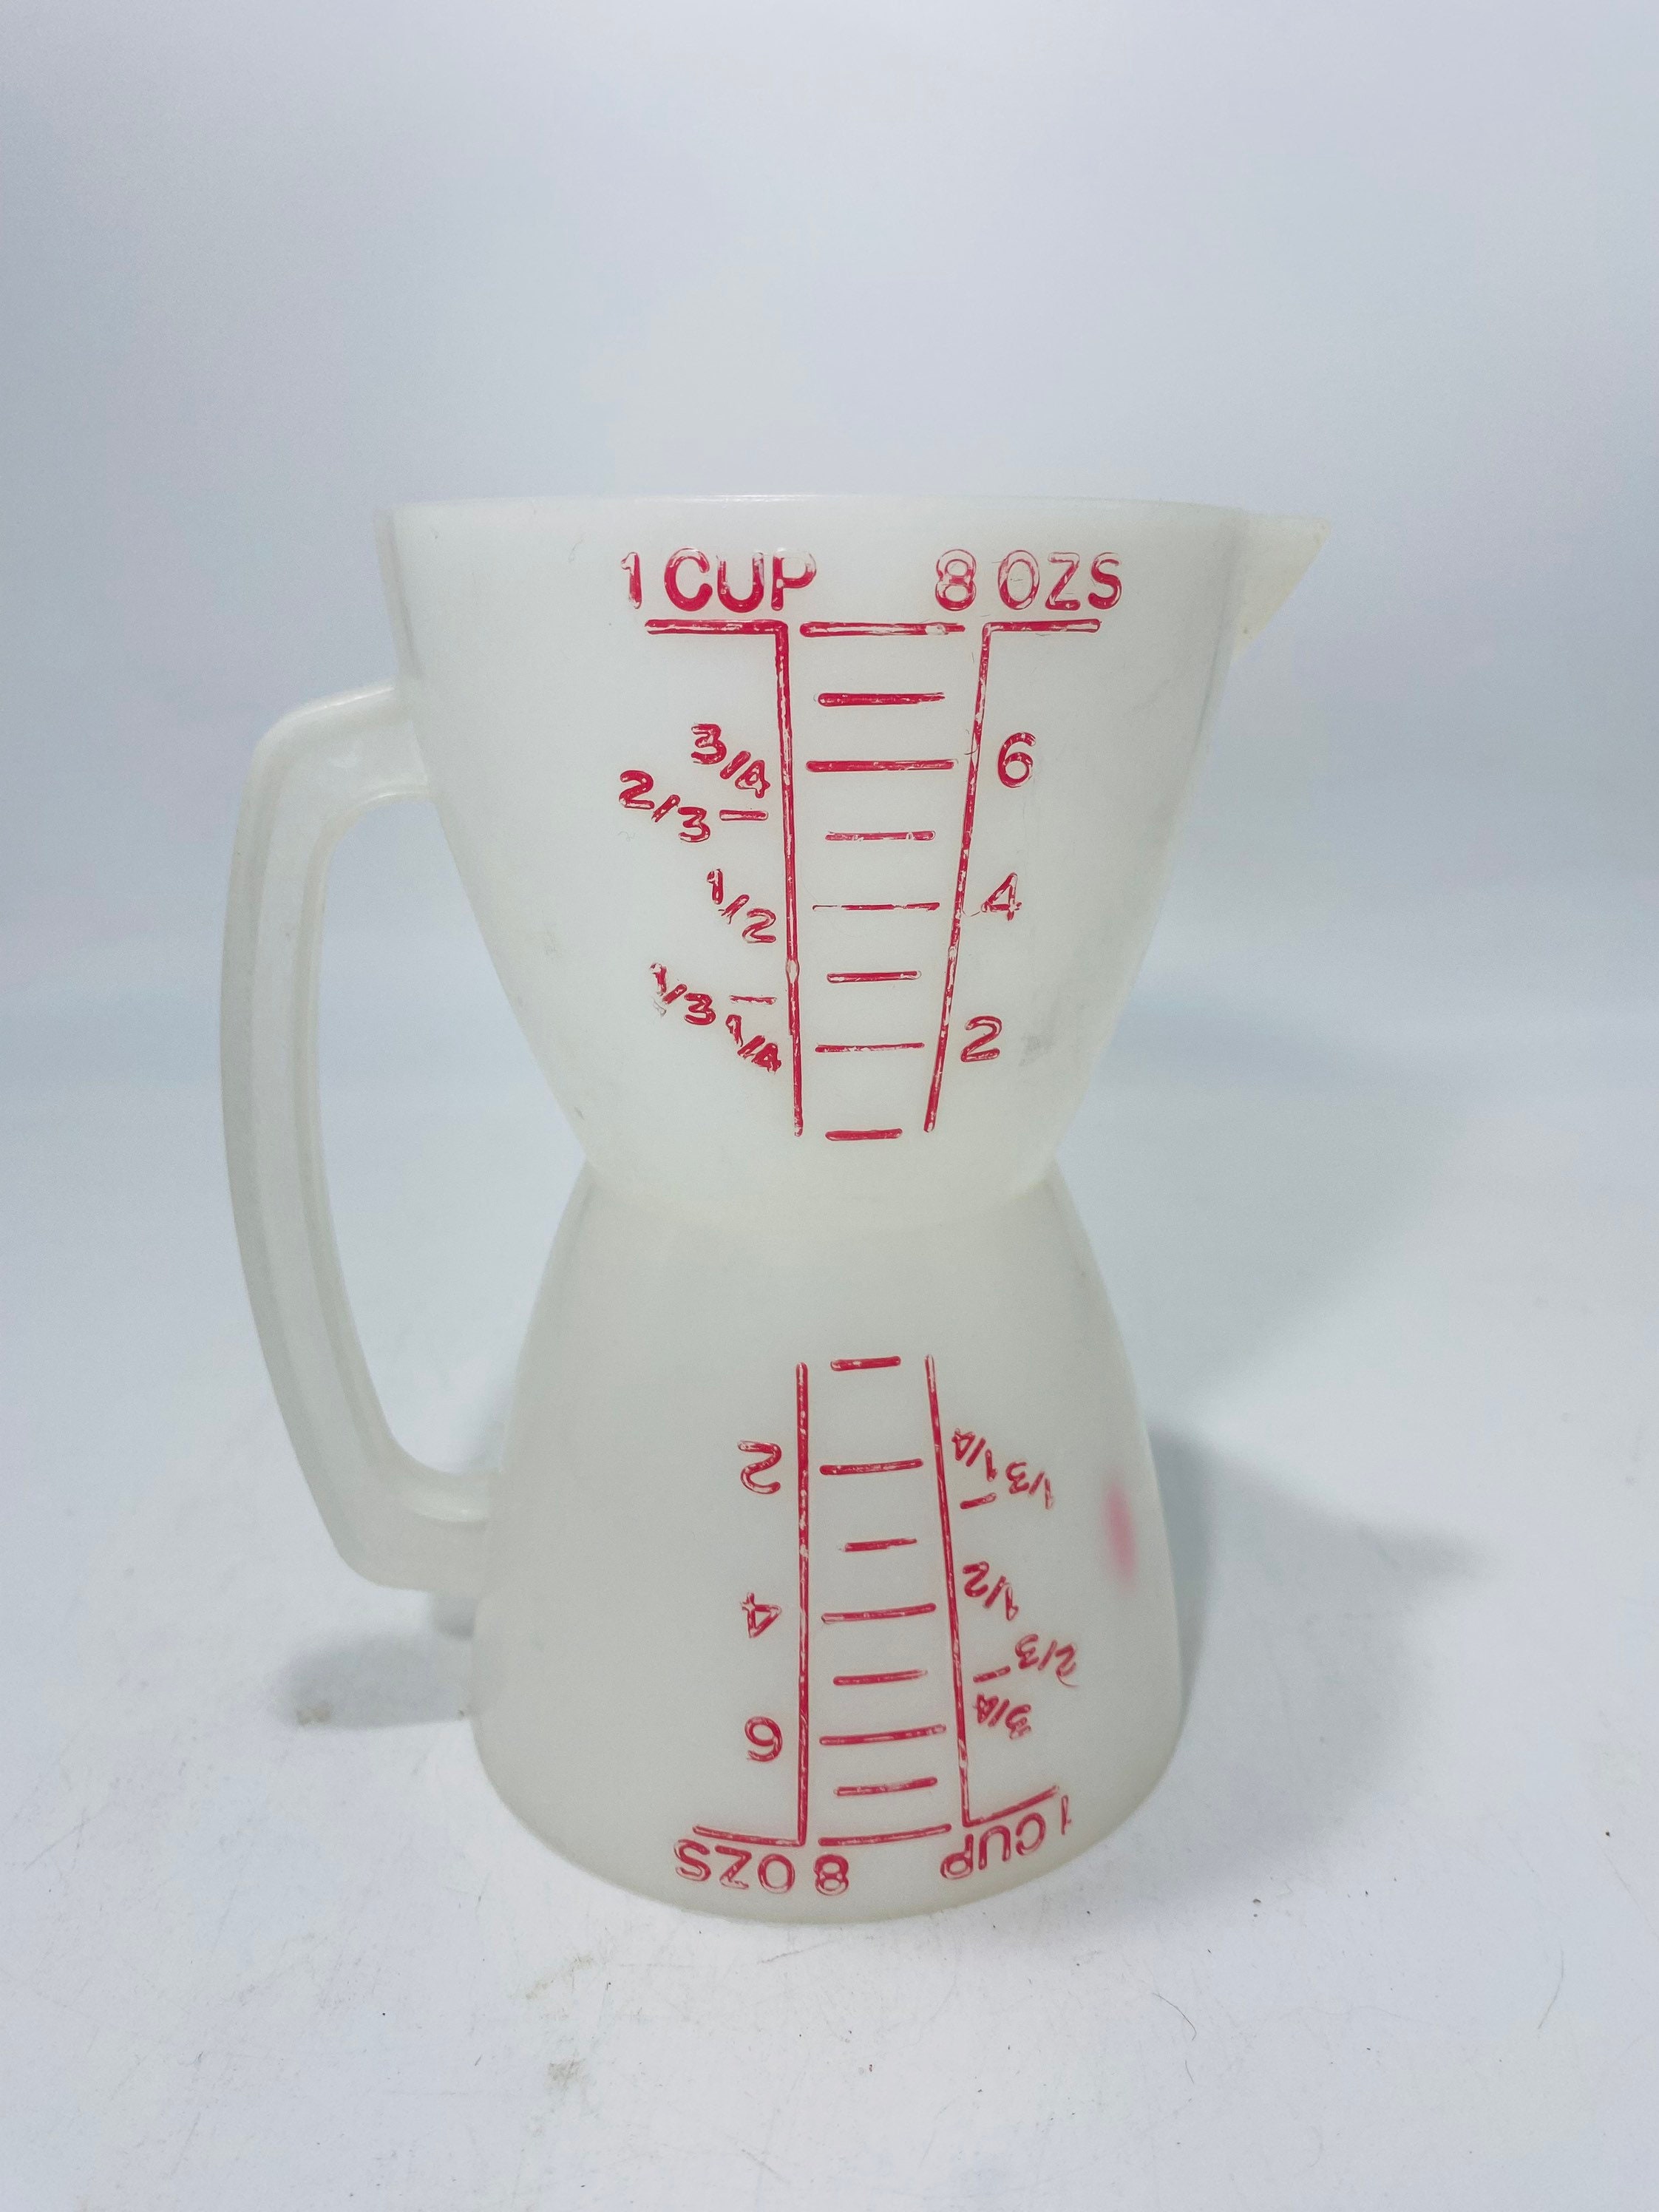 Tupperware Vintage Measuring Cup Set for Sale in Mount Prospect